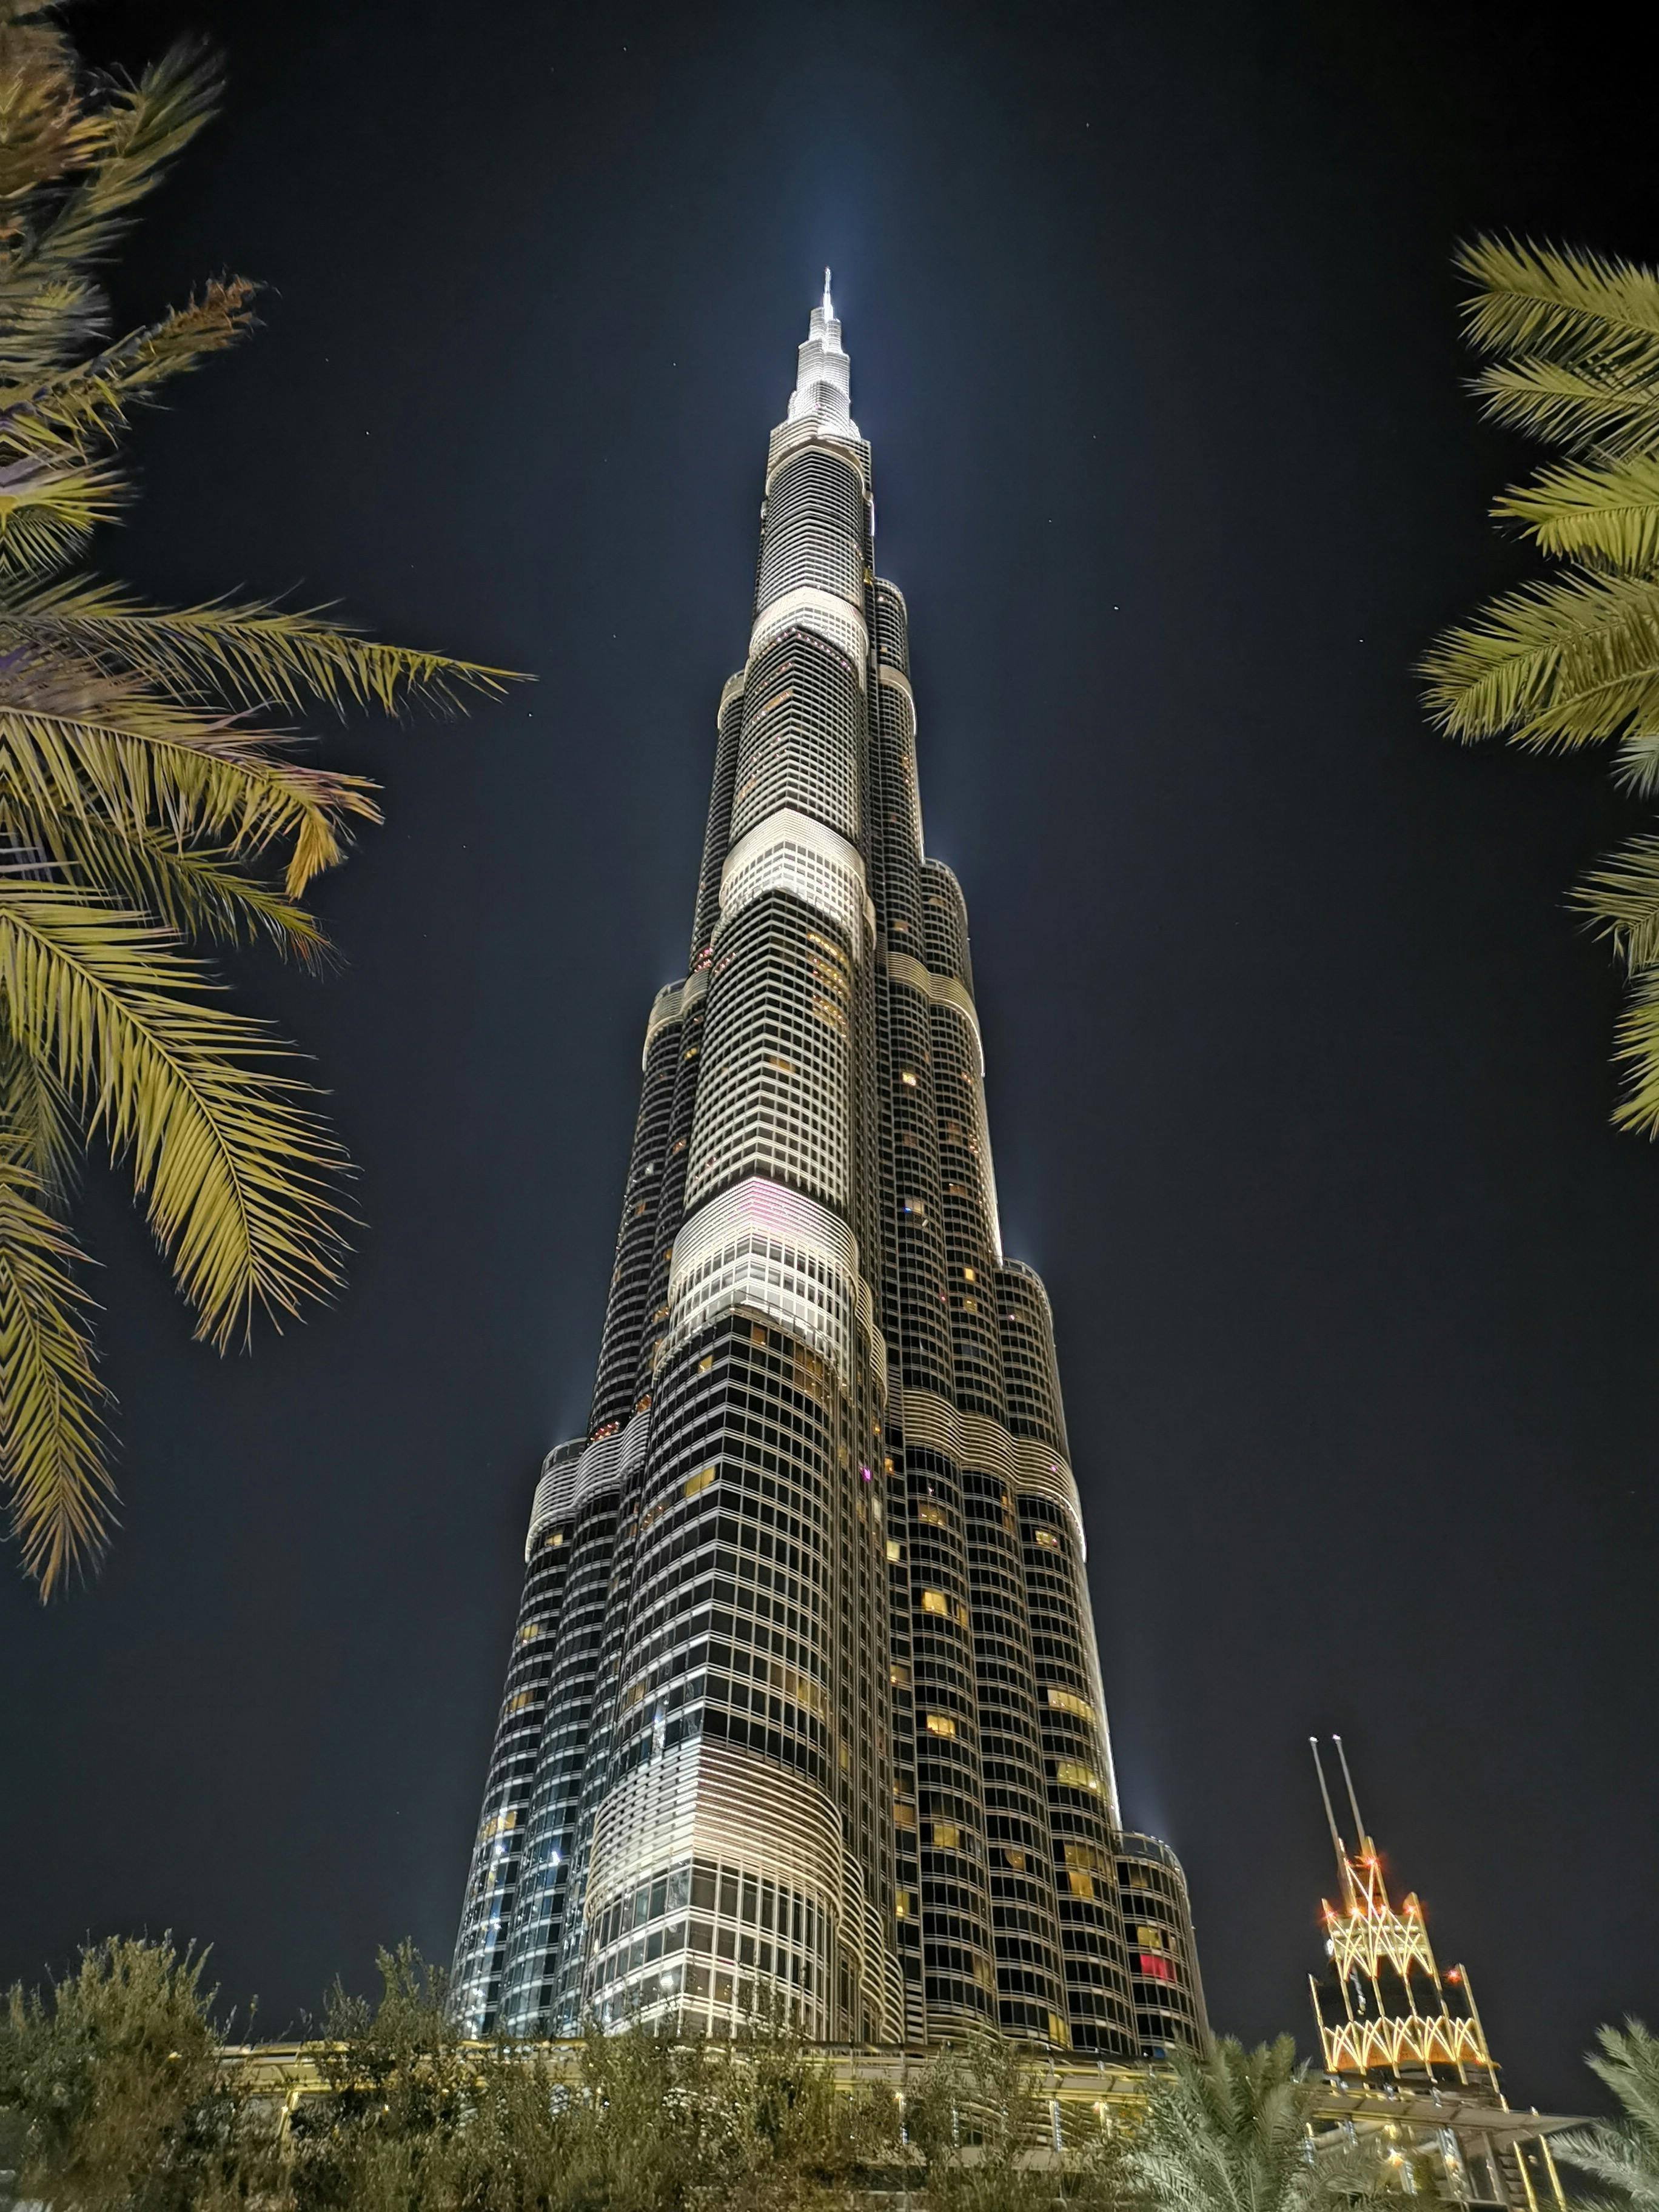 100+ Burj Khalifa Pictures | Download Free Images on Unsplash